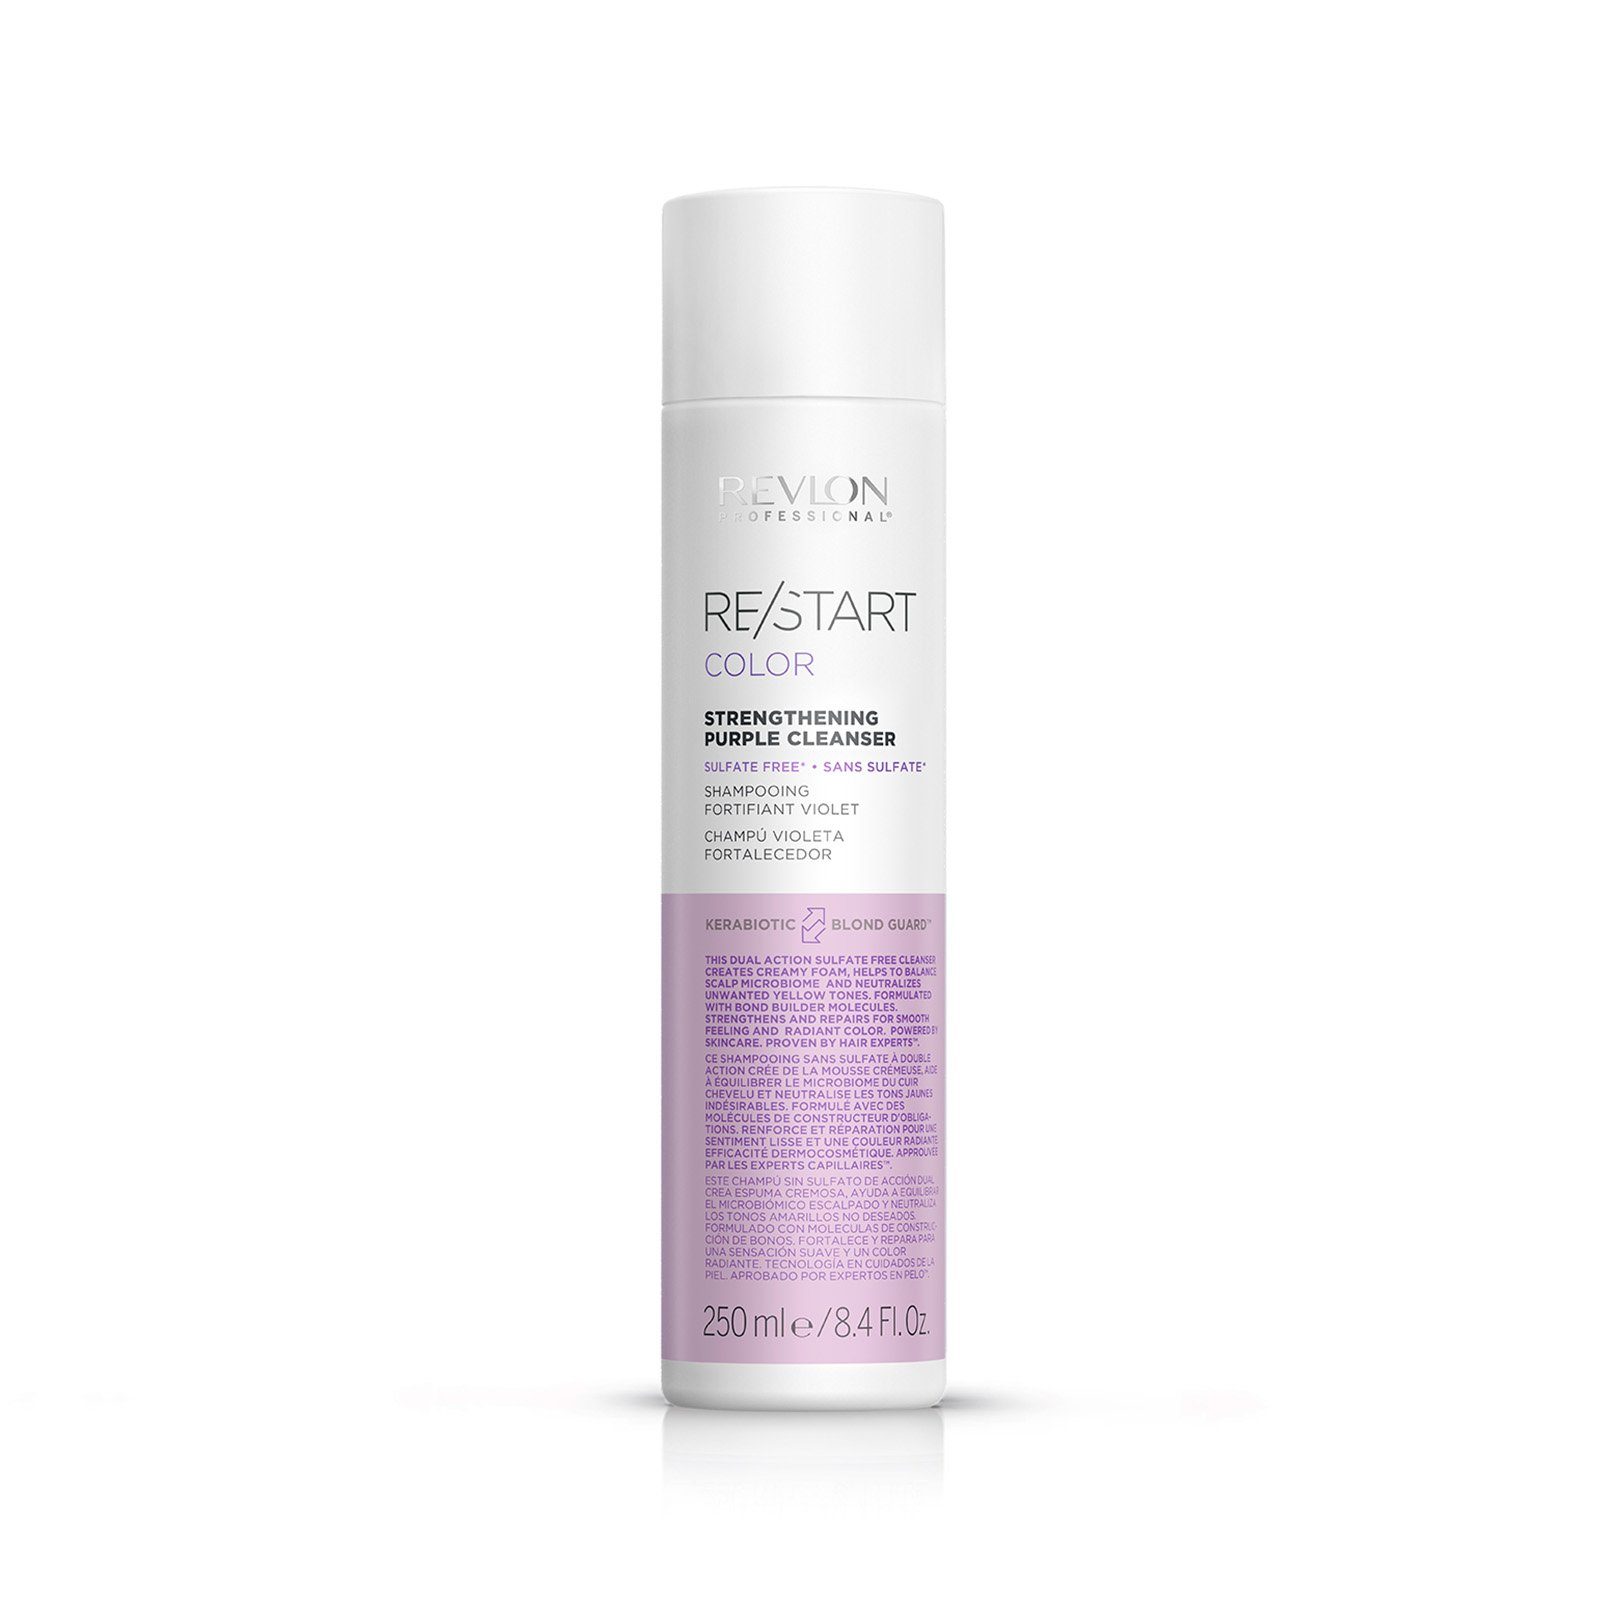 ml Re/Start REVLON Haarshampoo 250 PROFESSIONAL Purple COLOR Cleanser